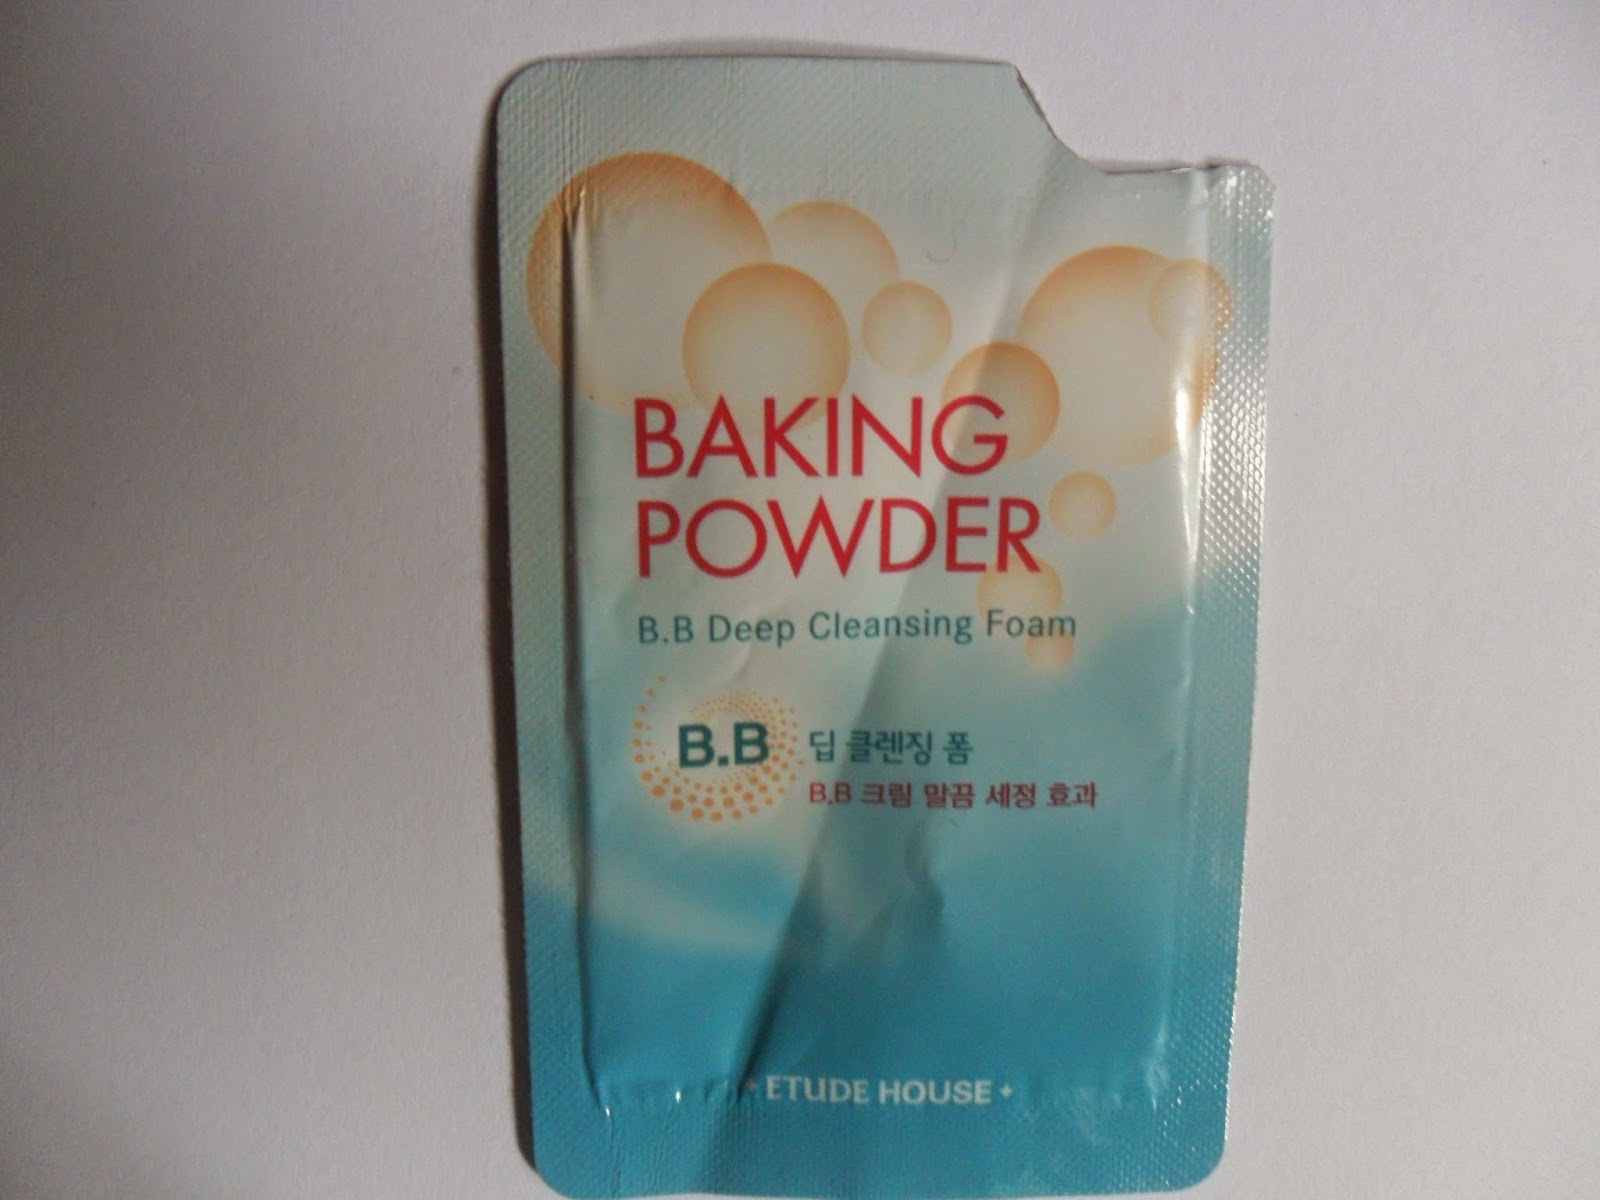 Бейкинг пудра. Baking Powder Cleansing Foam пробник. Etude Baking Powder крем-маска. Пудра для бейкинга.